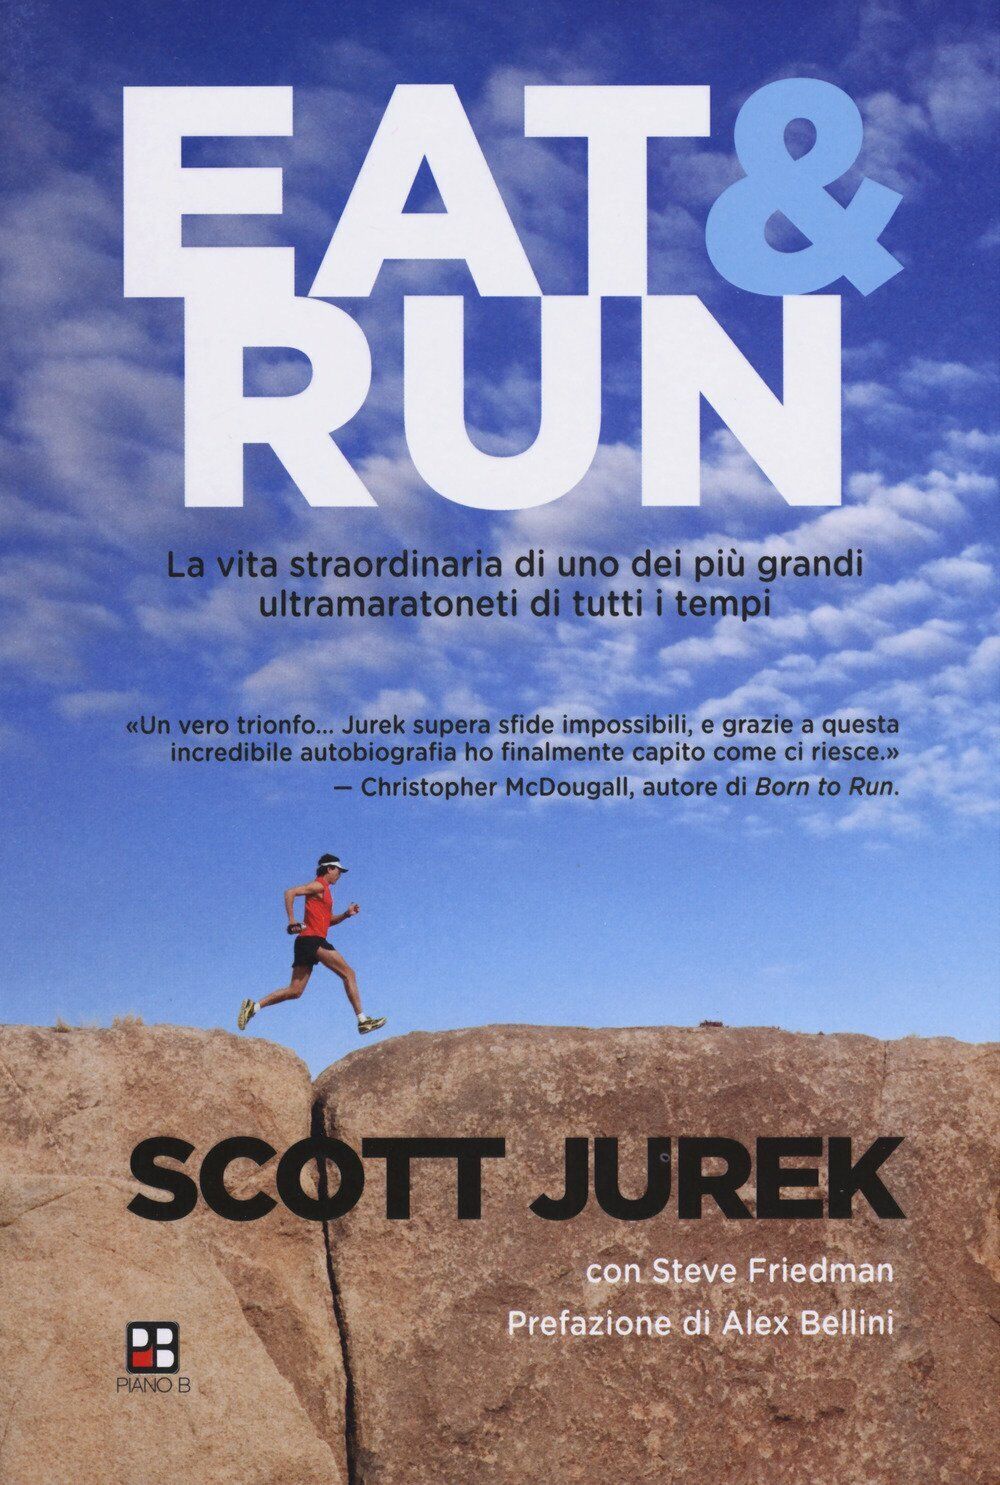 Eat & Run - Scott Jurek, Steve Friedman - Piano B, 2018 libro usato